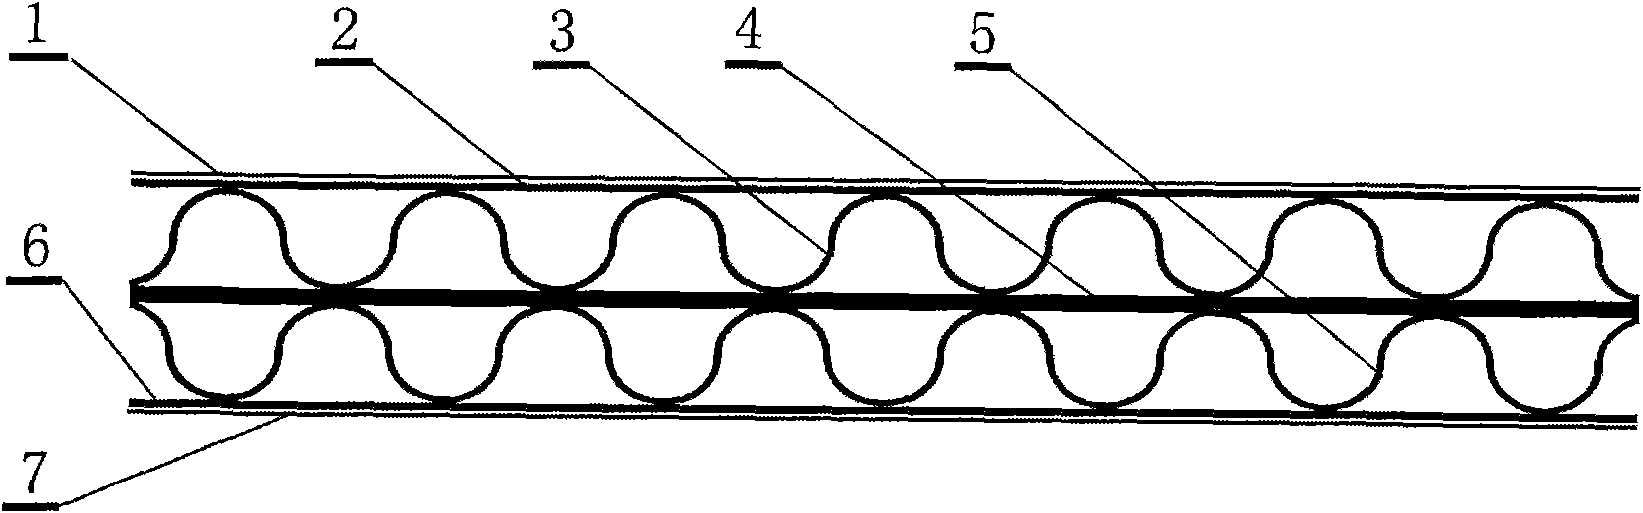 Method for manufacturing attapulgite preservative corrugated cardboard